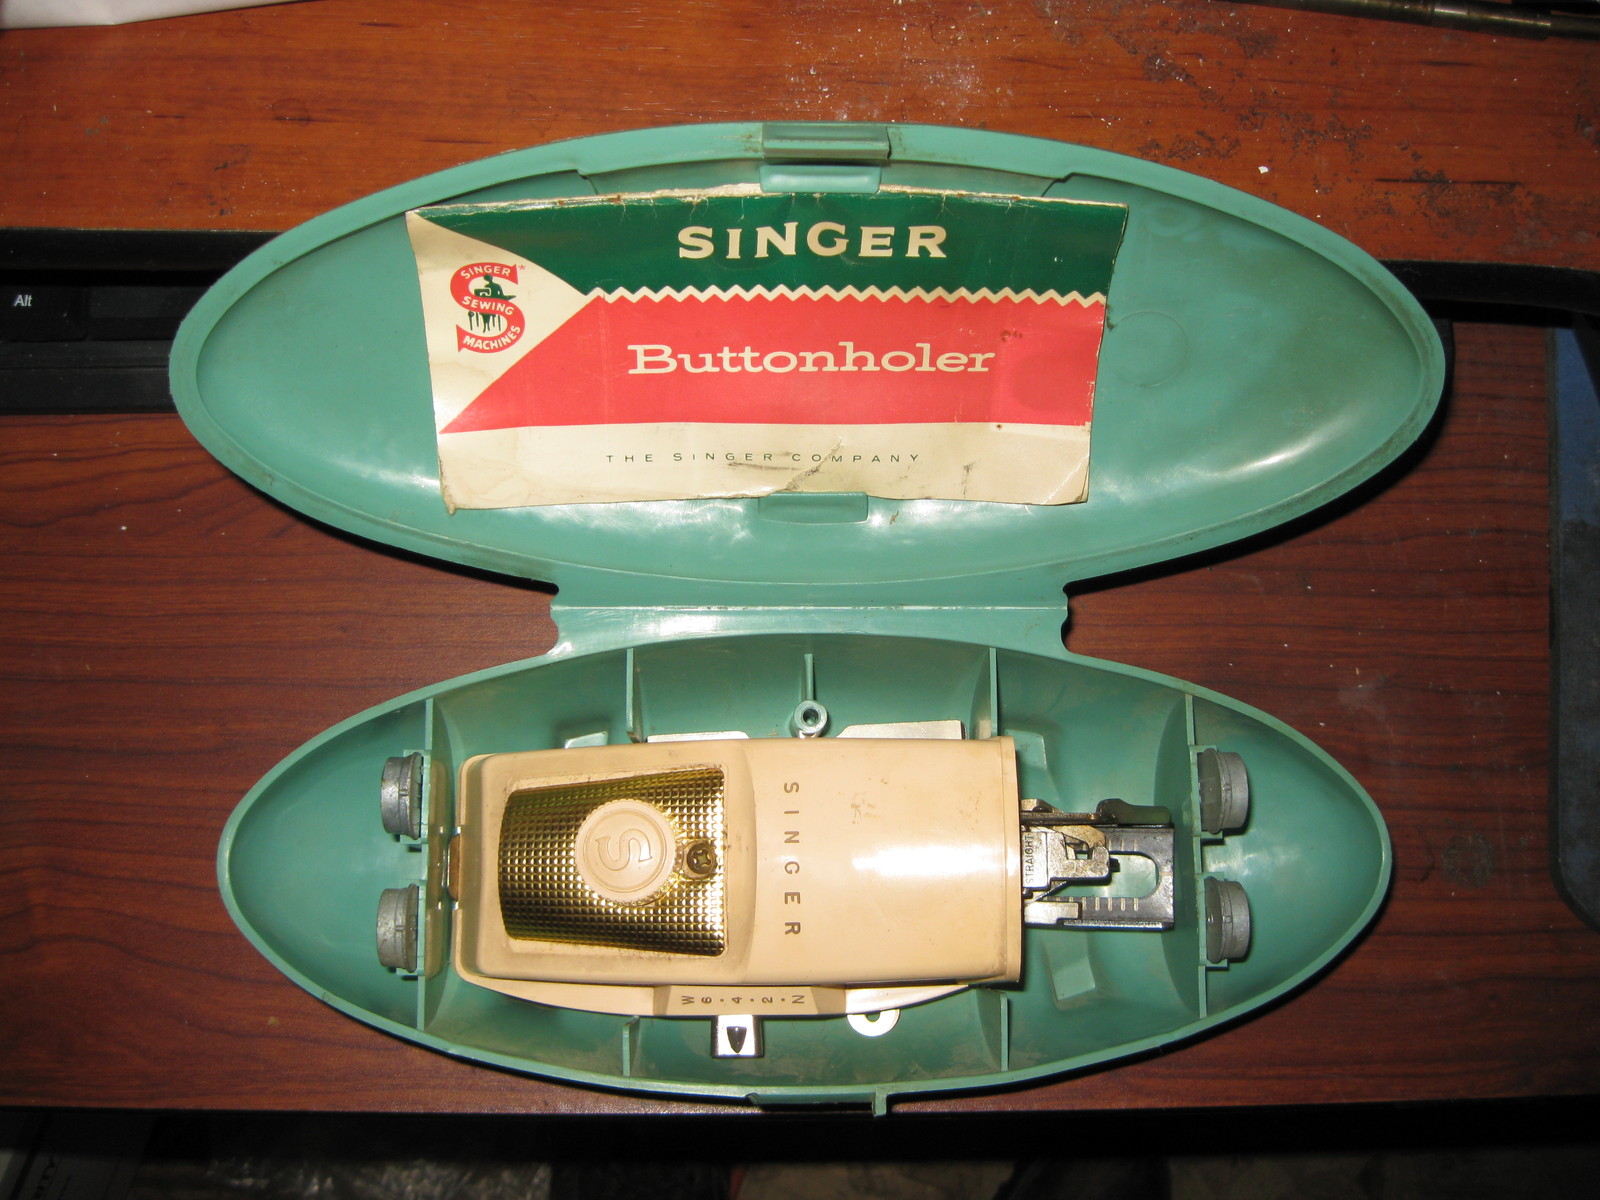 Singer 489500 Slant Shank Foot Buttonholer w/5 Templates & Instructions - $7.50